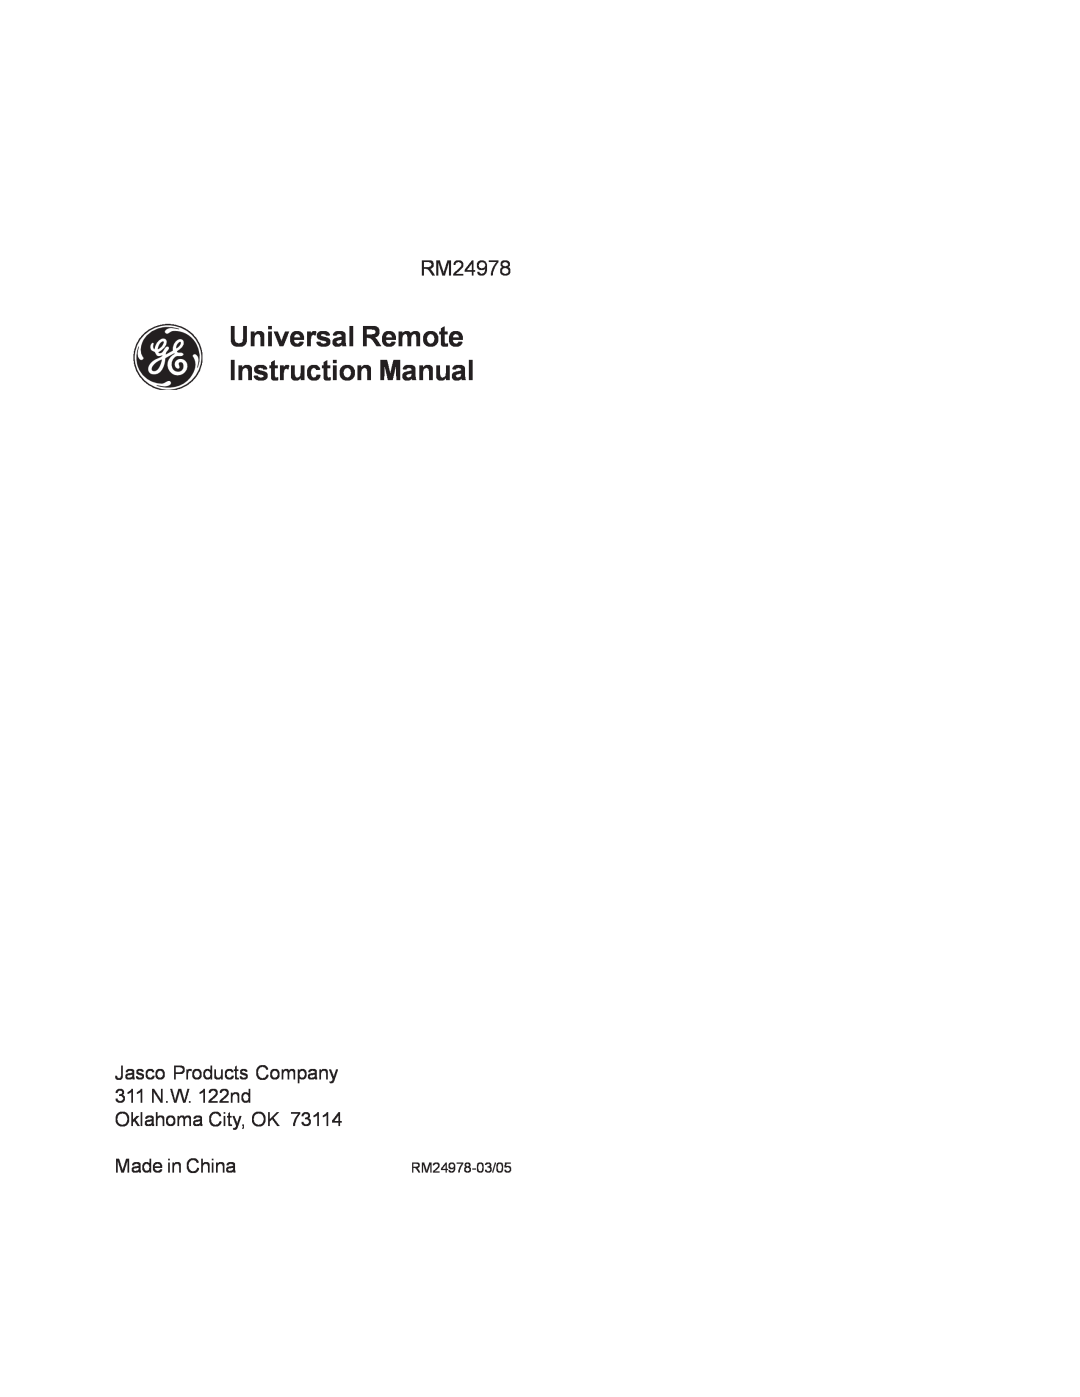 Jasco RM24978 Universal Remote Instruction Manual, Jasco Products Company 311 N.W. 122nd Oklahoma City, OK, Made in China 